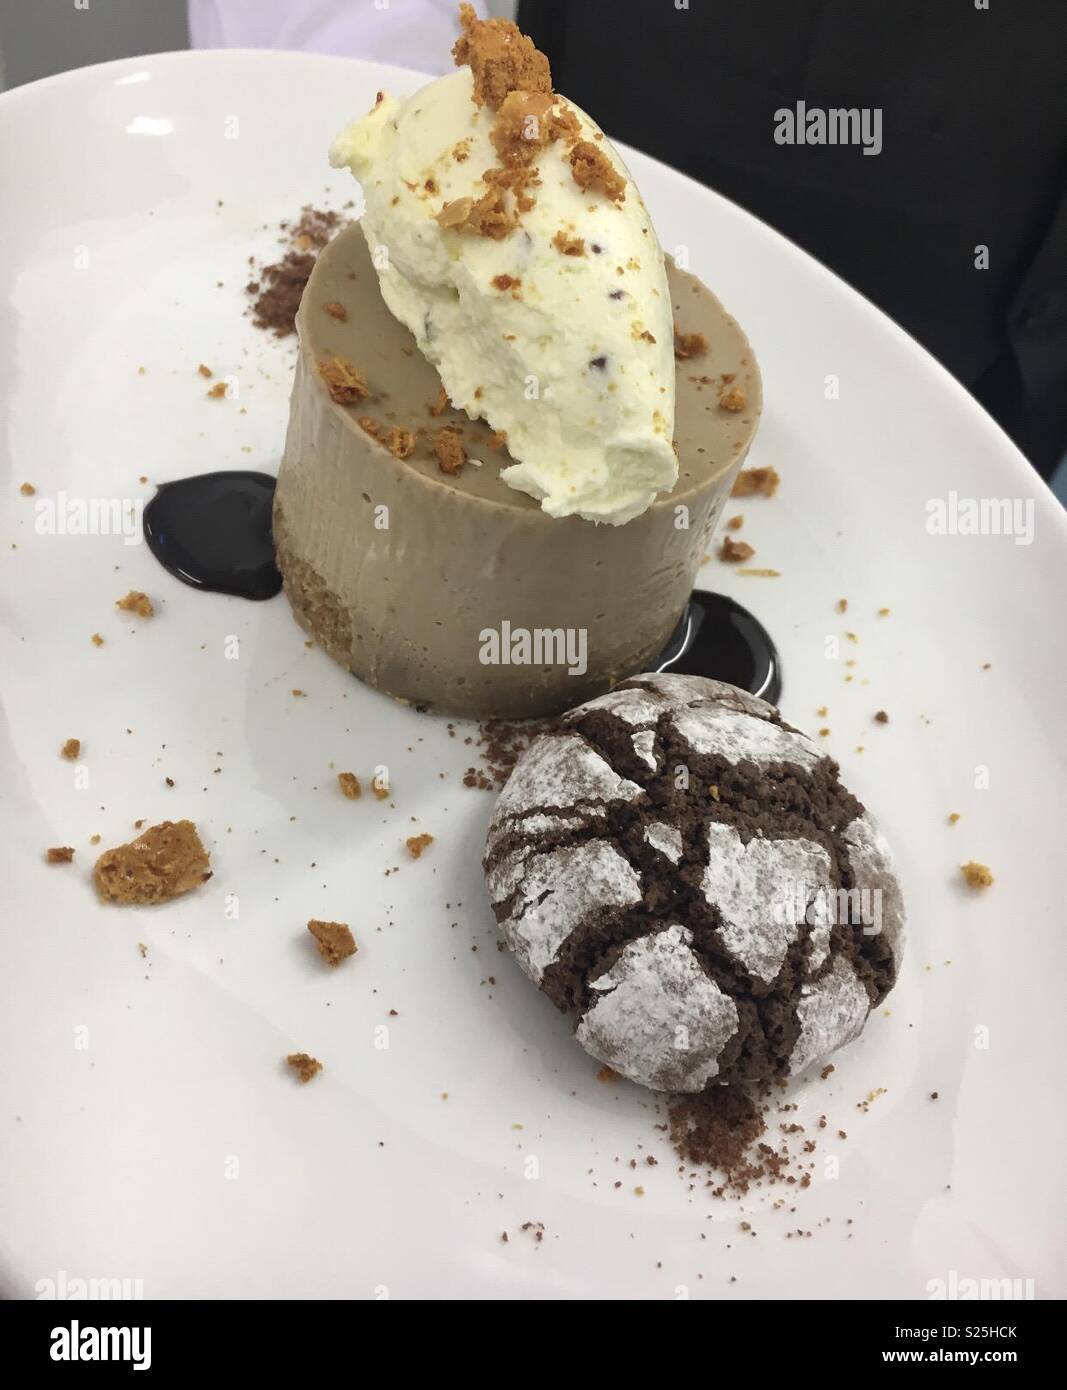 Mint aero cheesecake with a truffle cookie, honeycomb, mint creme and chocolate ganache. Stock Photo